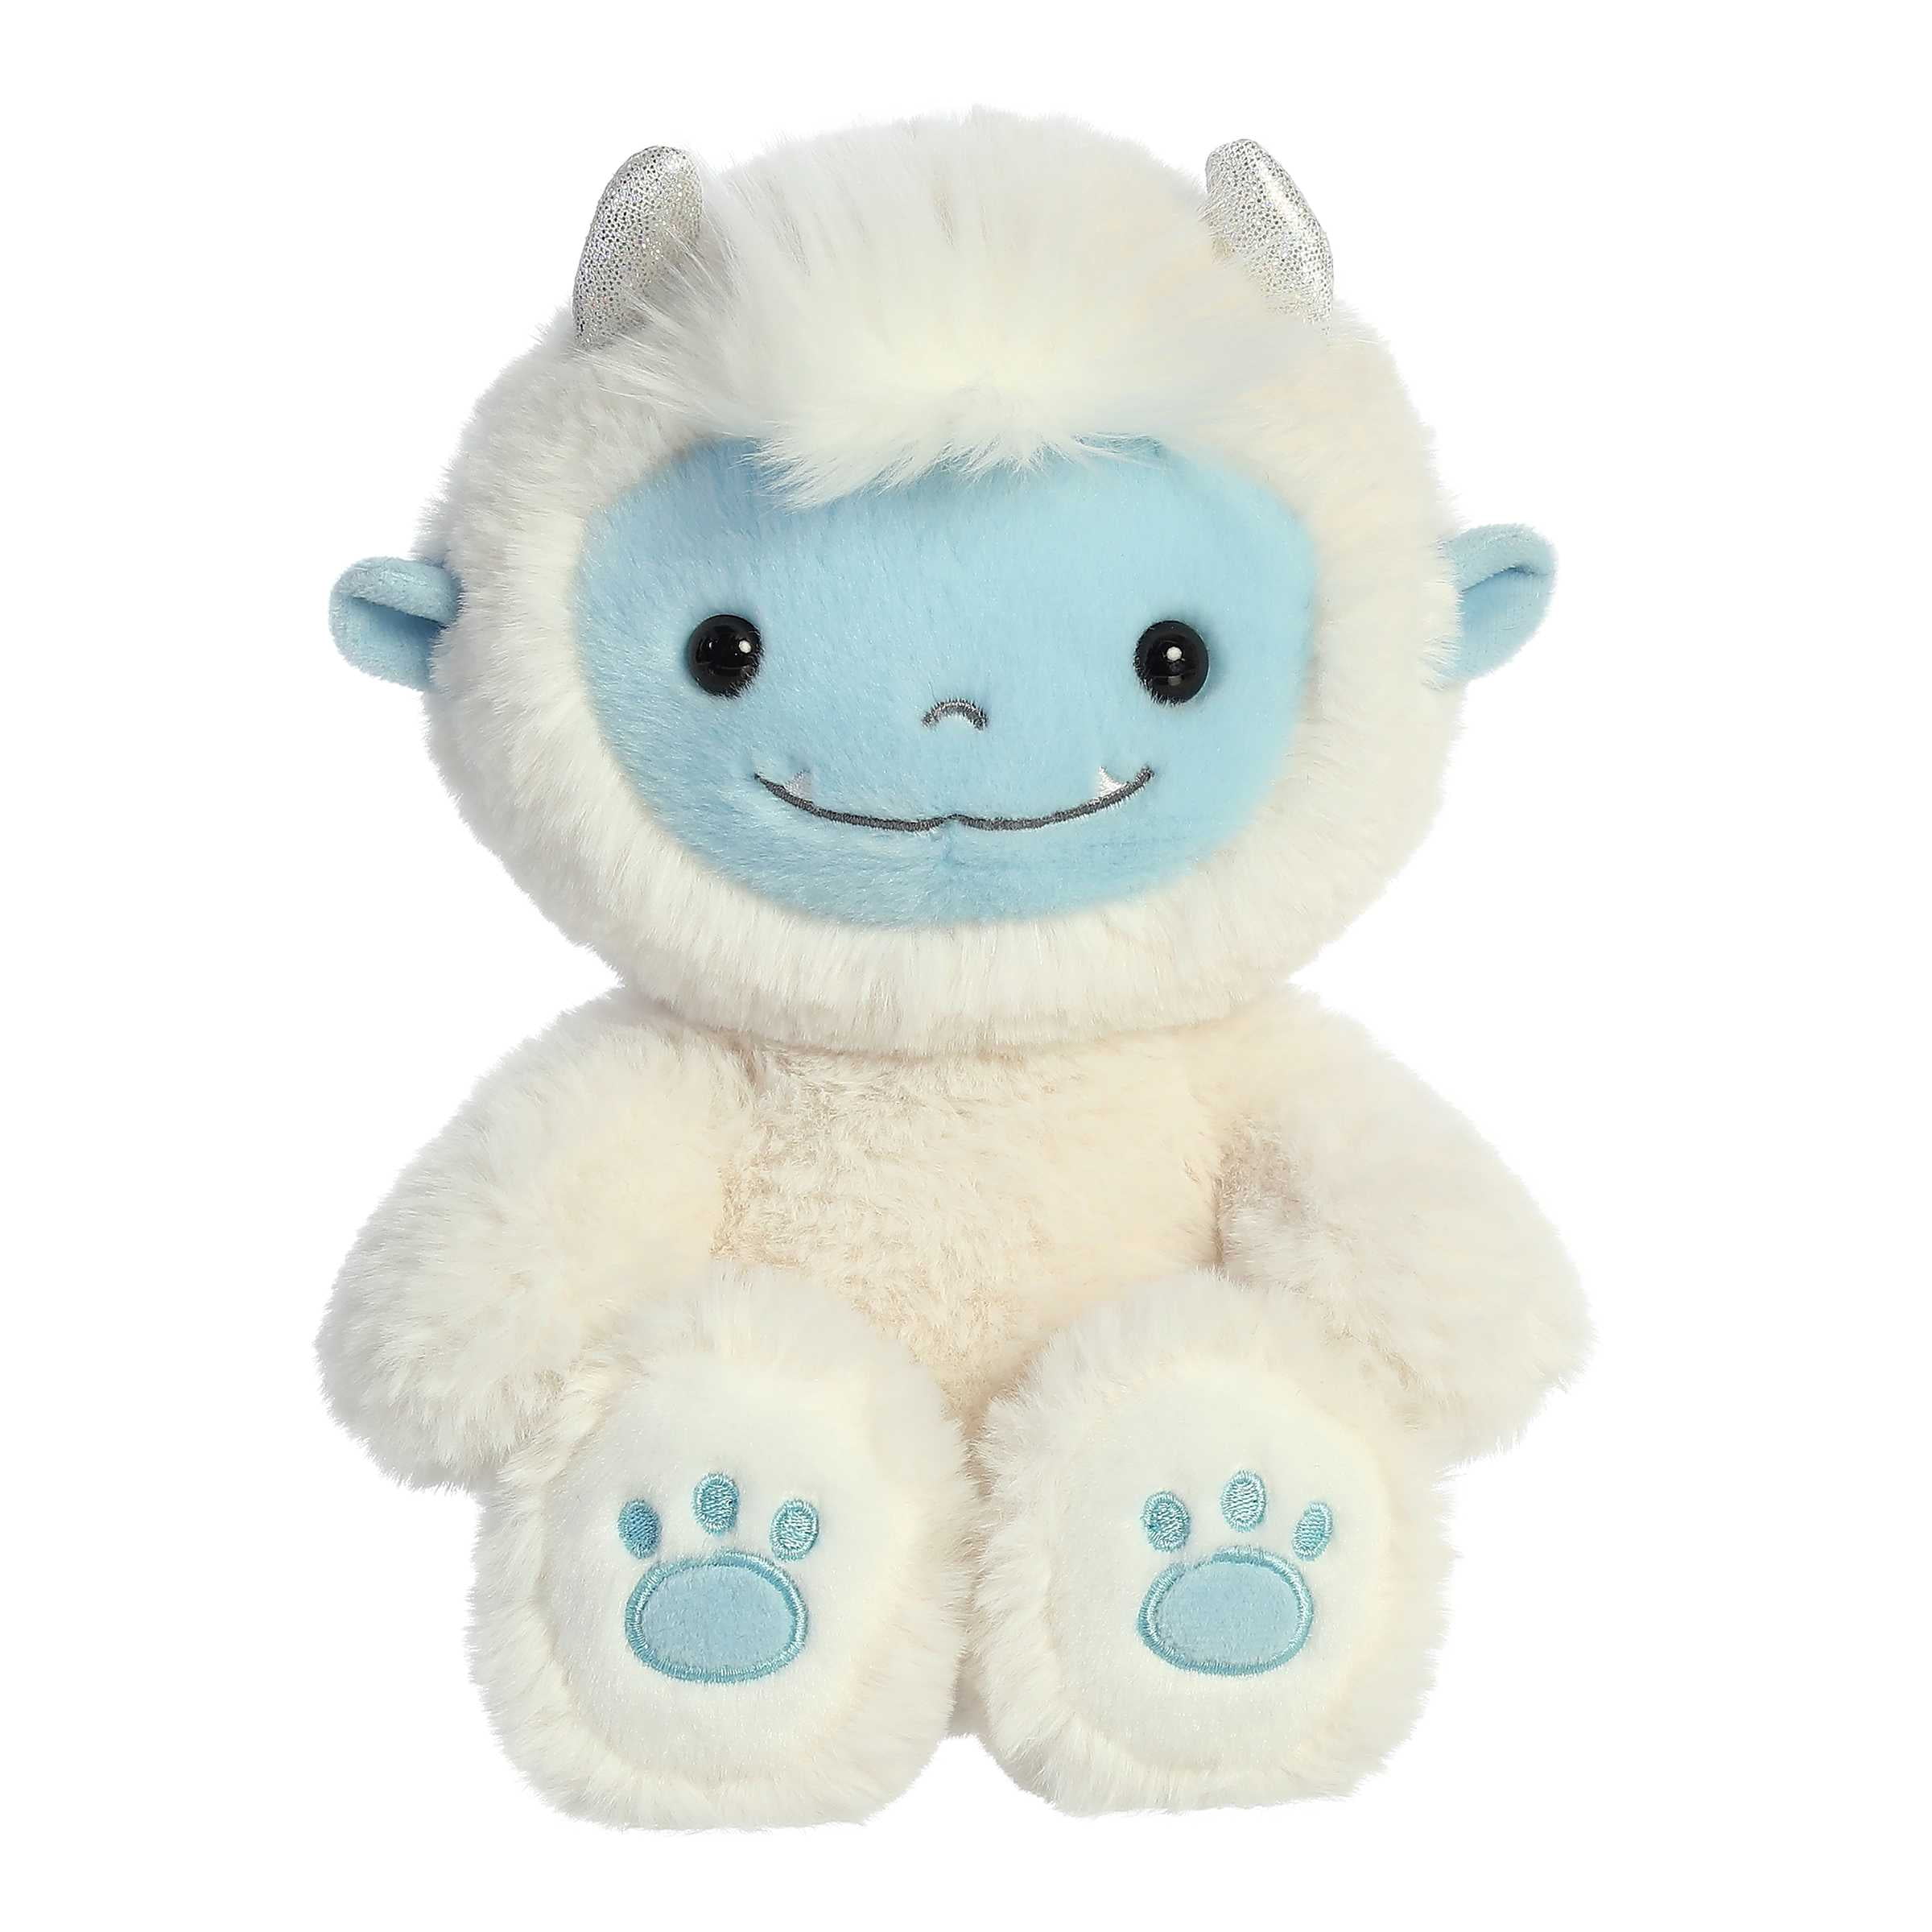 NoJo Hello! Lucky Yeti White and Blue Plush Stuffed Animal with Rabbit Plush